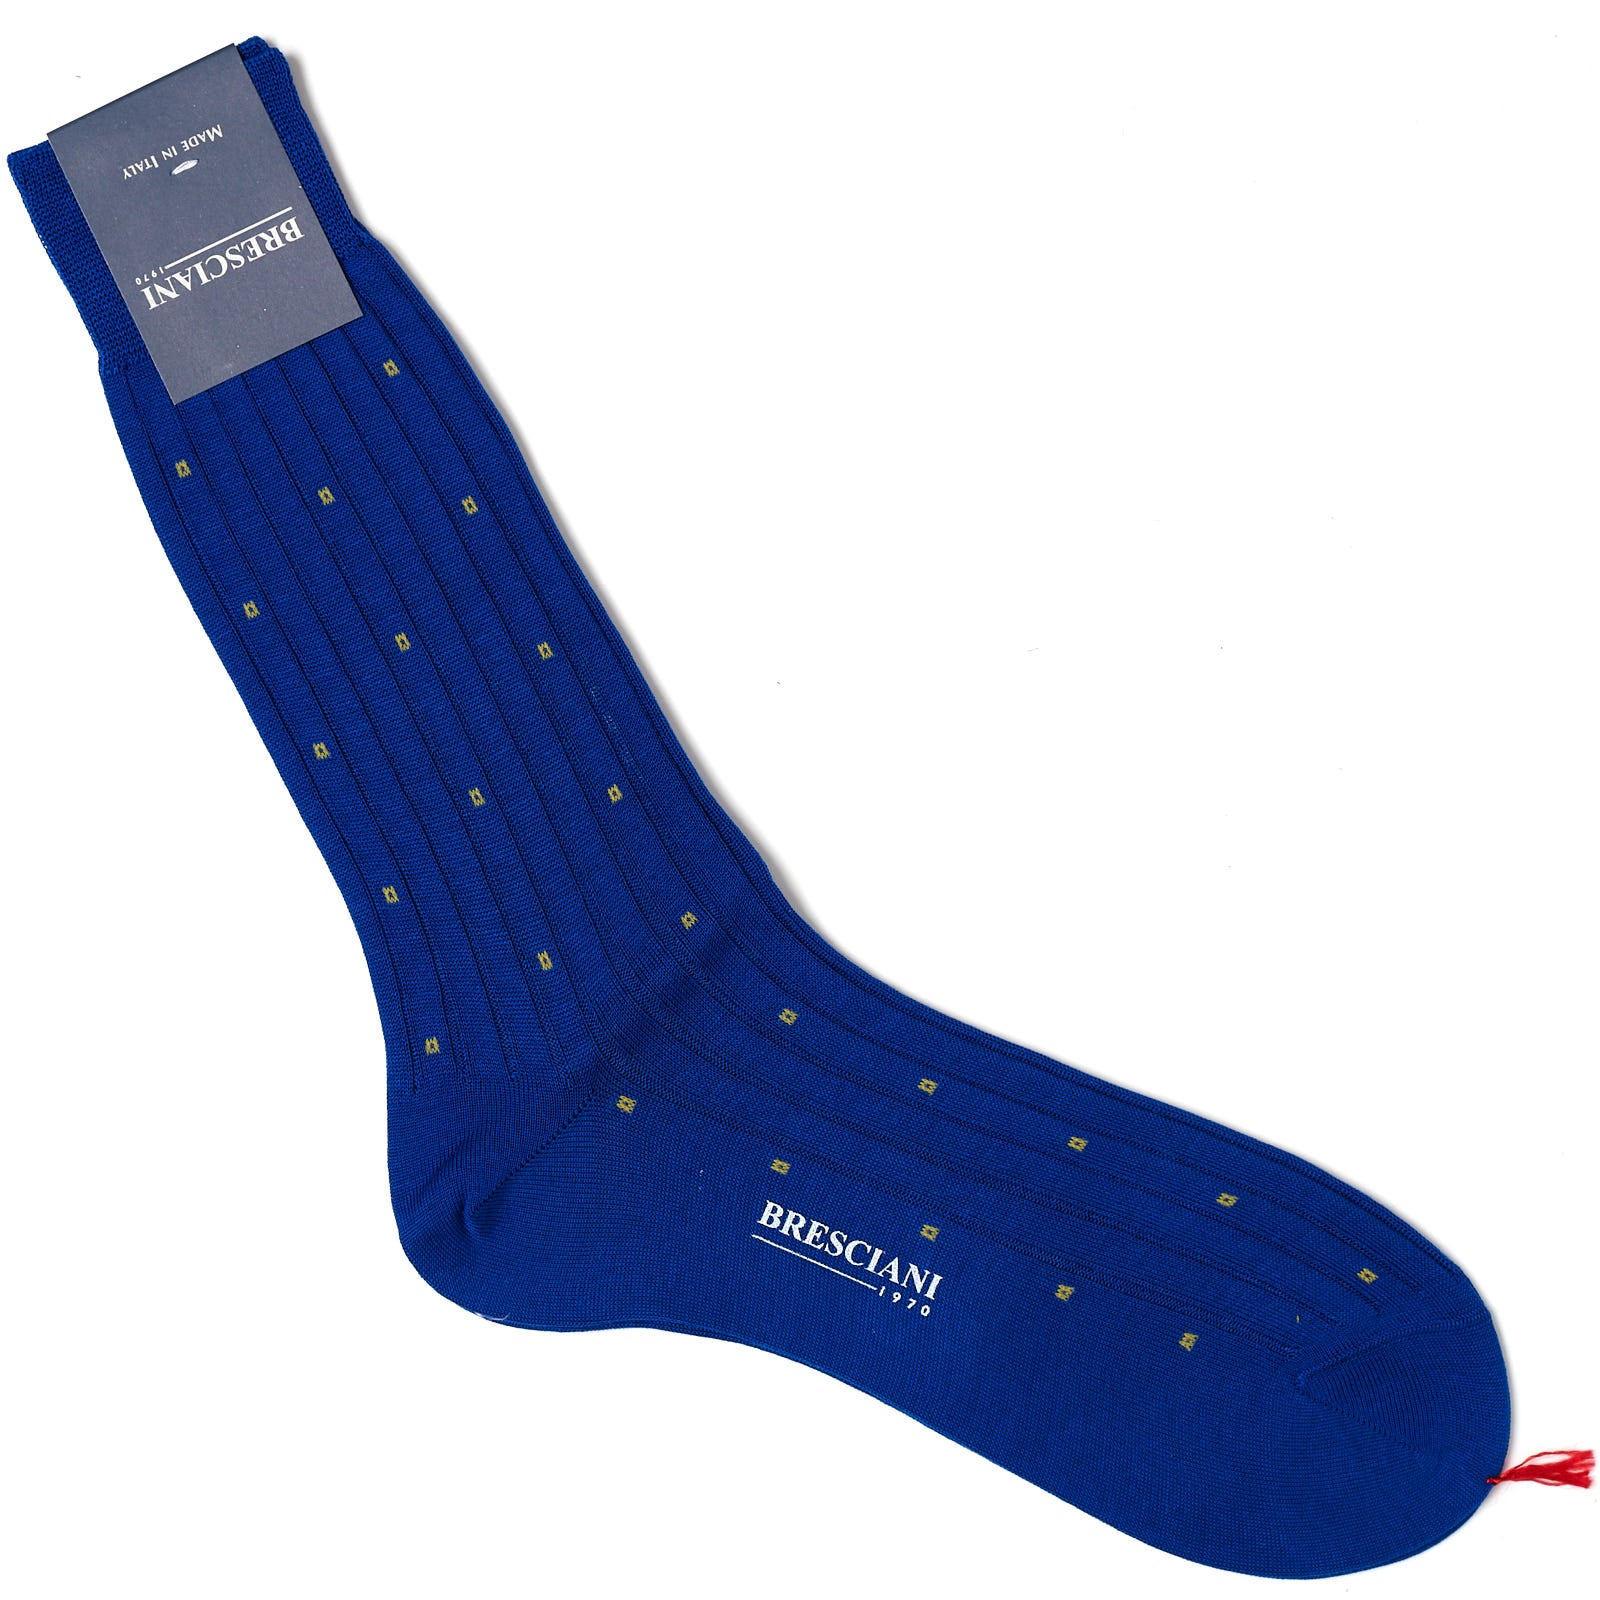 BRESCIANI Cotton Polka Dot Design Mid Calf Length Socks M-L BRESCIANI